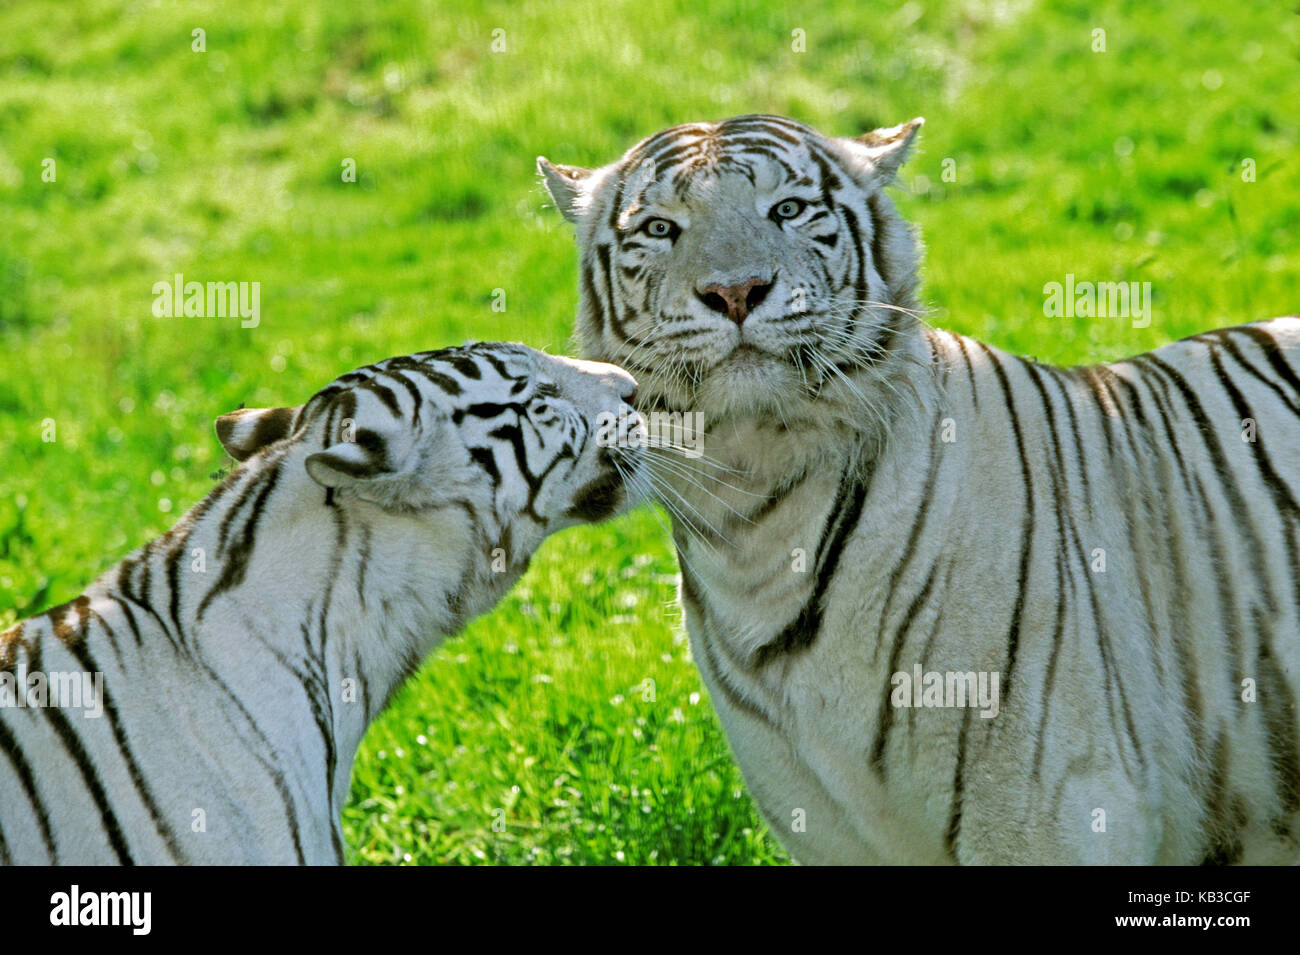 White tigers, Panthera tigris, medium close-up, Stock Photo